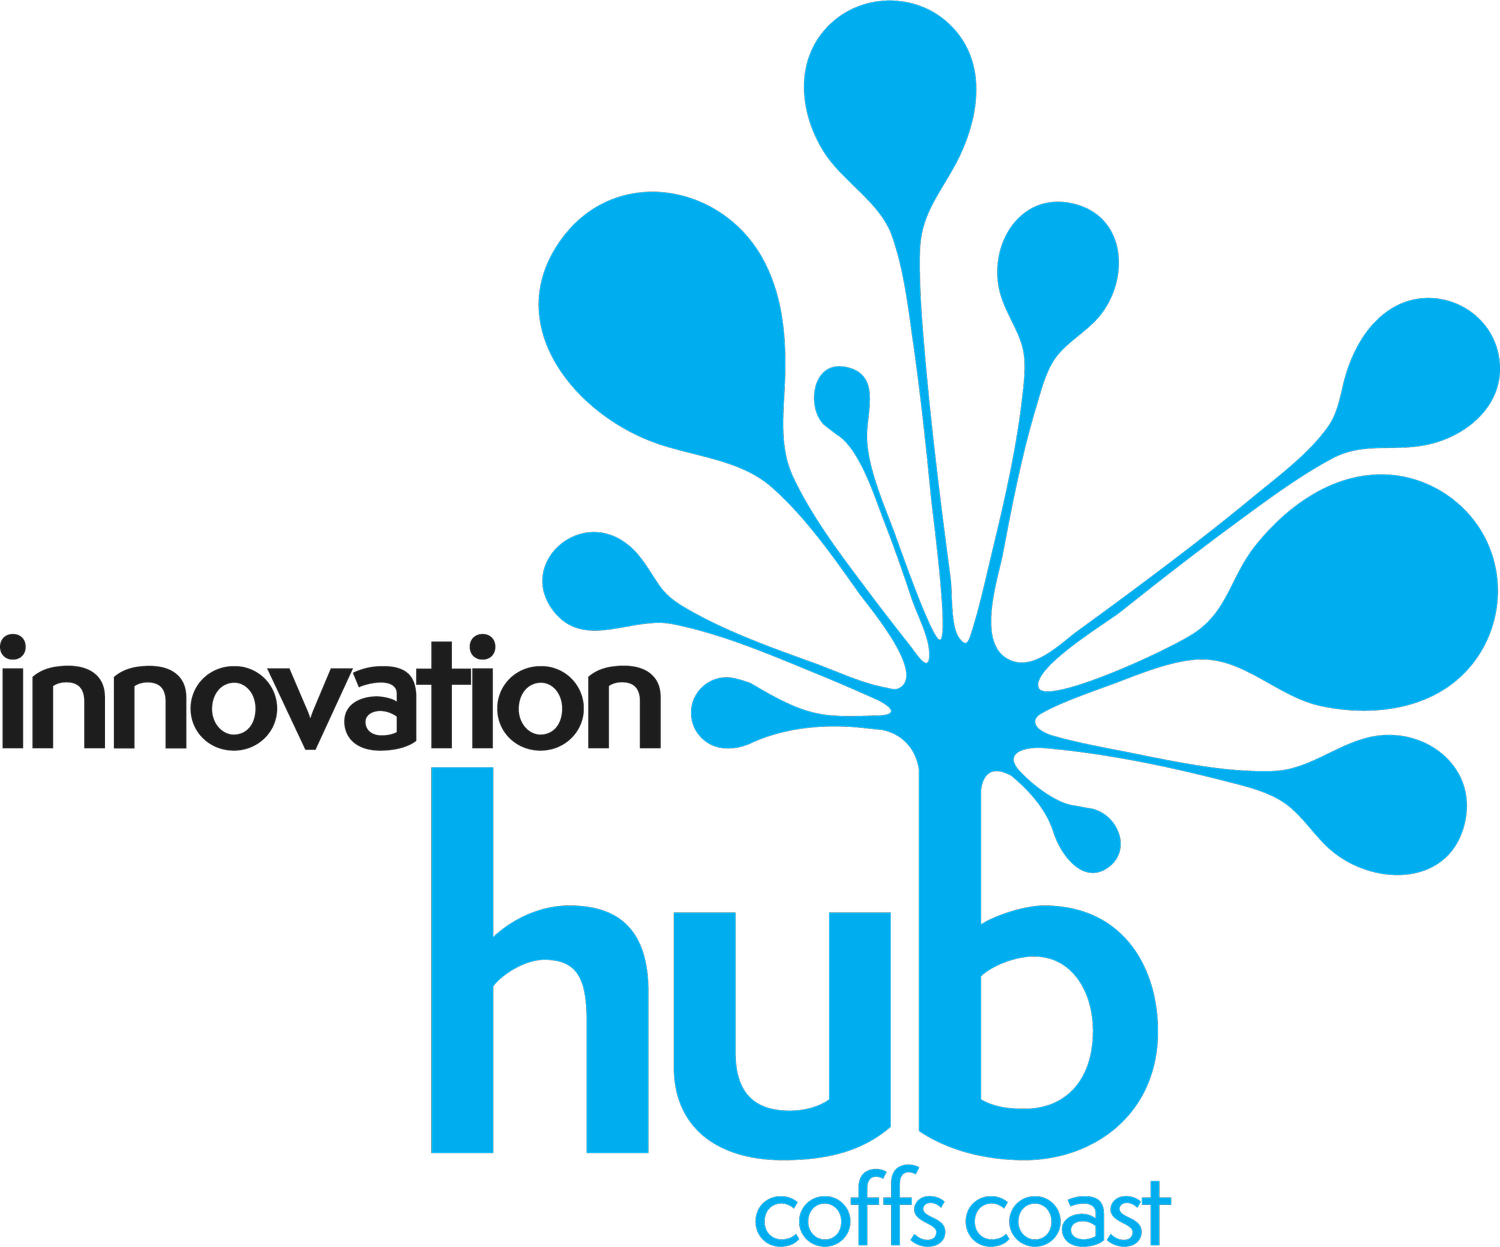 Innovation Hub Coffs Coast